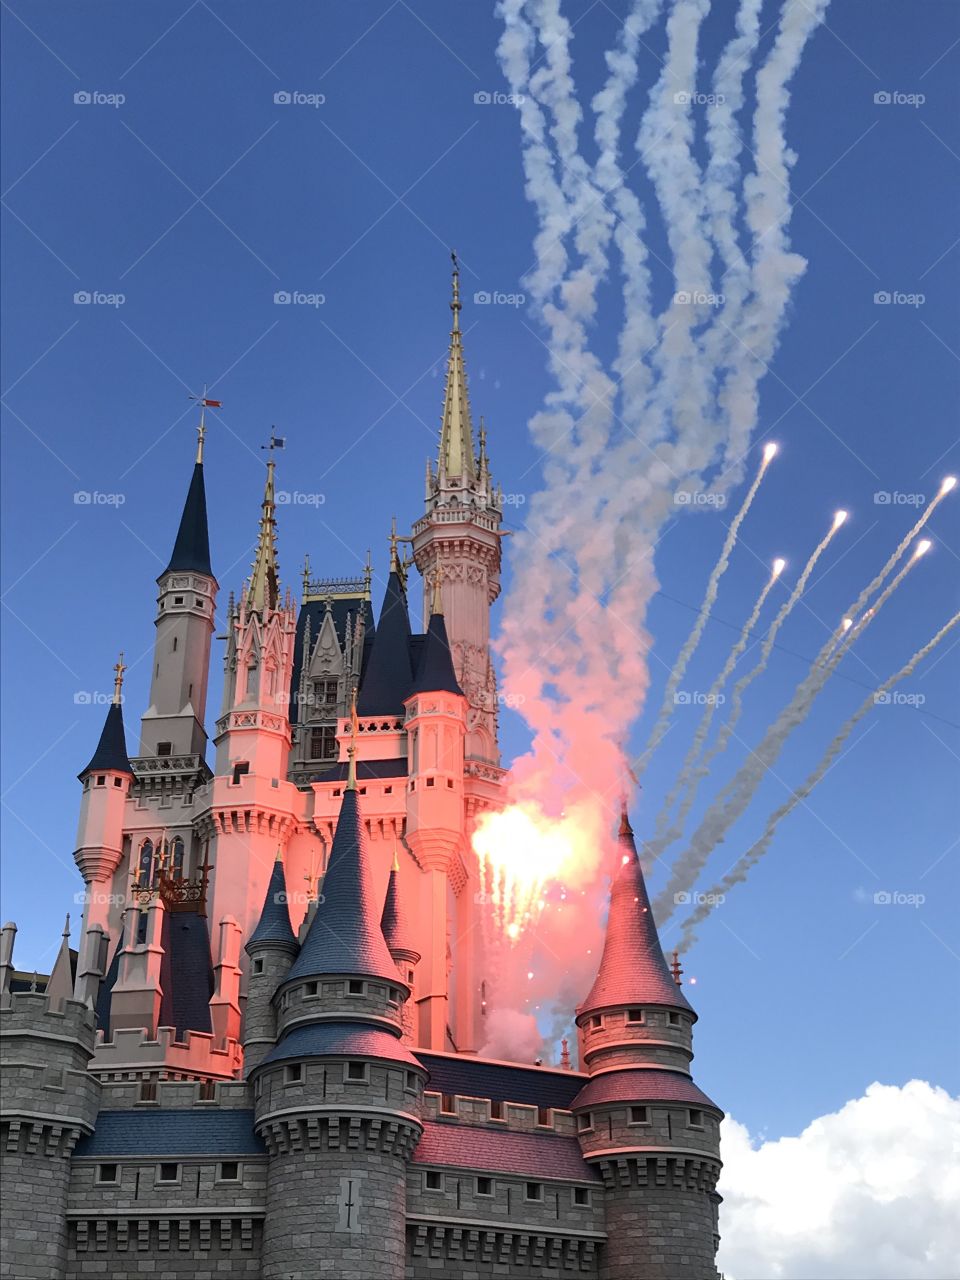 Disney castle fireworks 